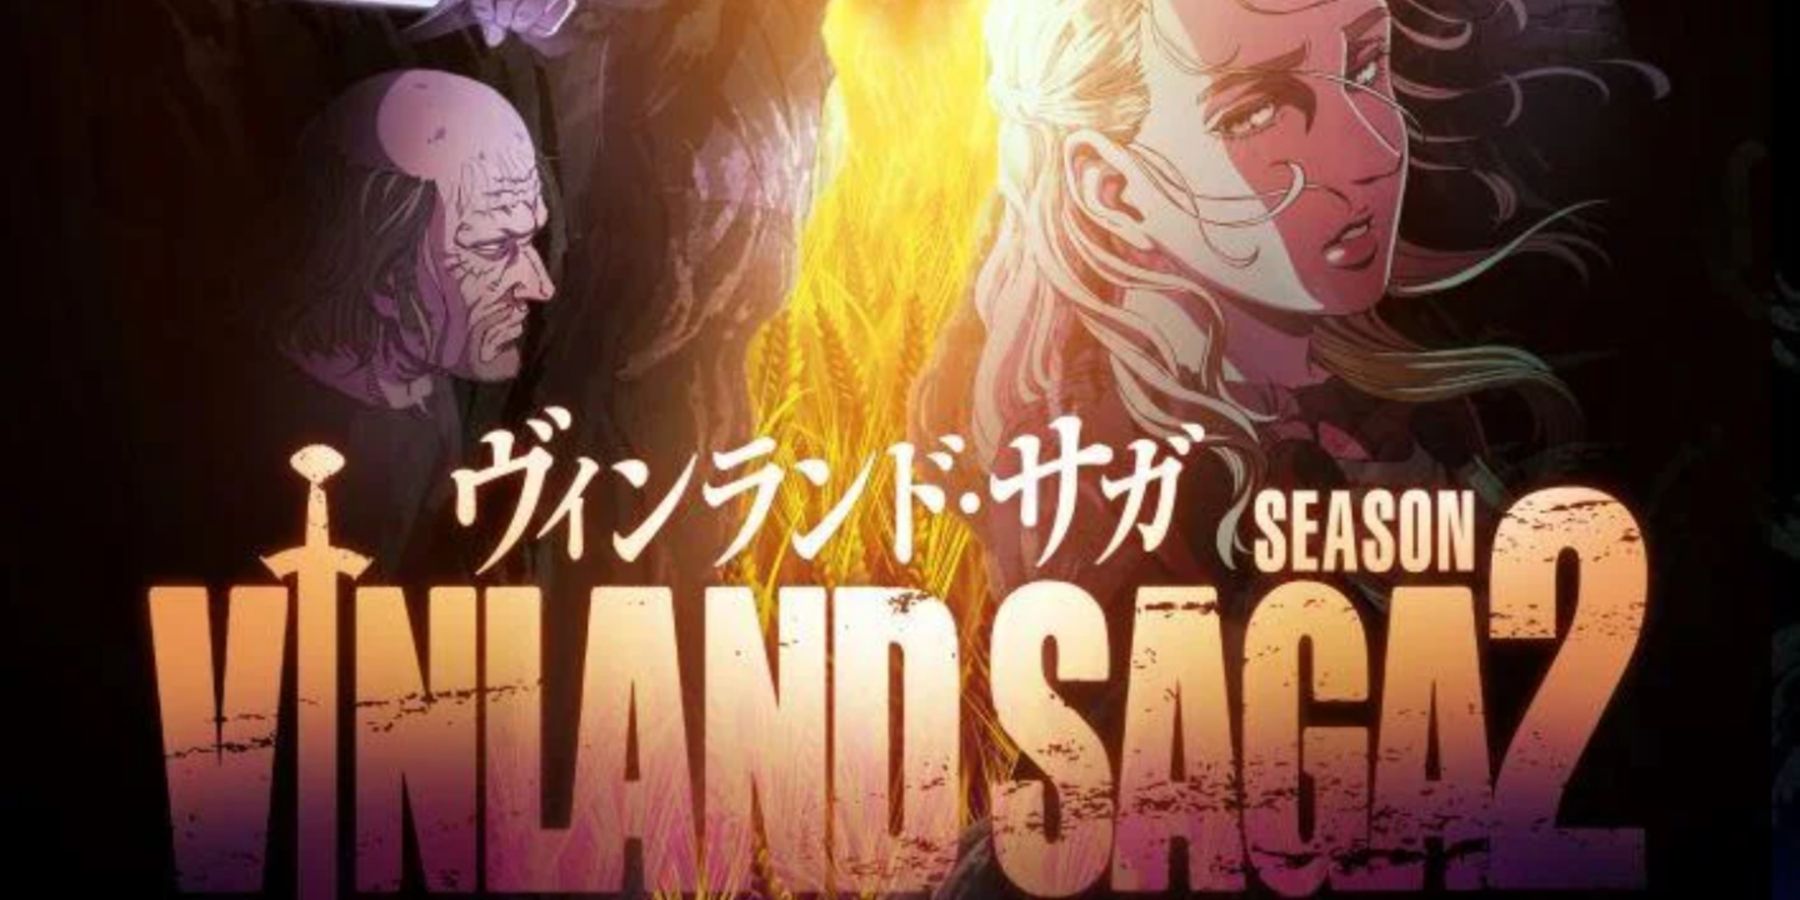 Vinland Saga 2nd Anniversary Memorial Video & New Announcements To